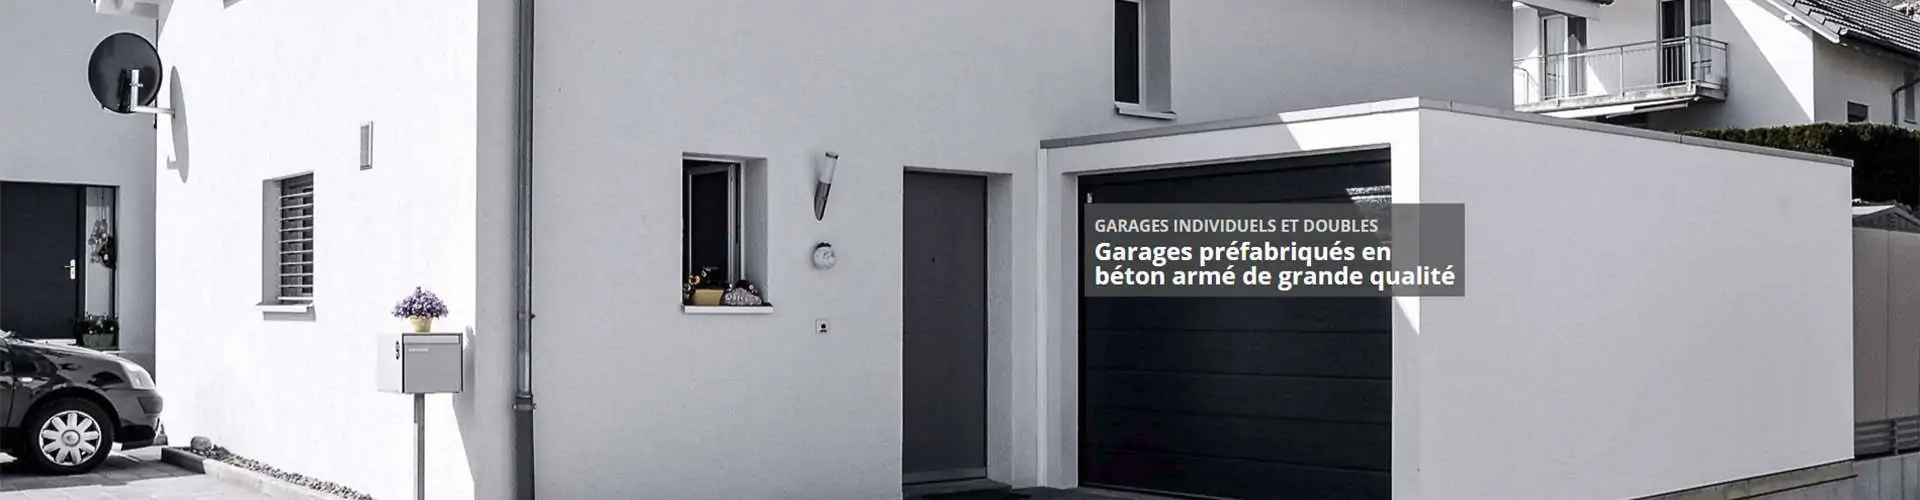 garage individuel